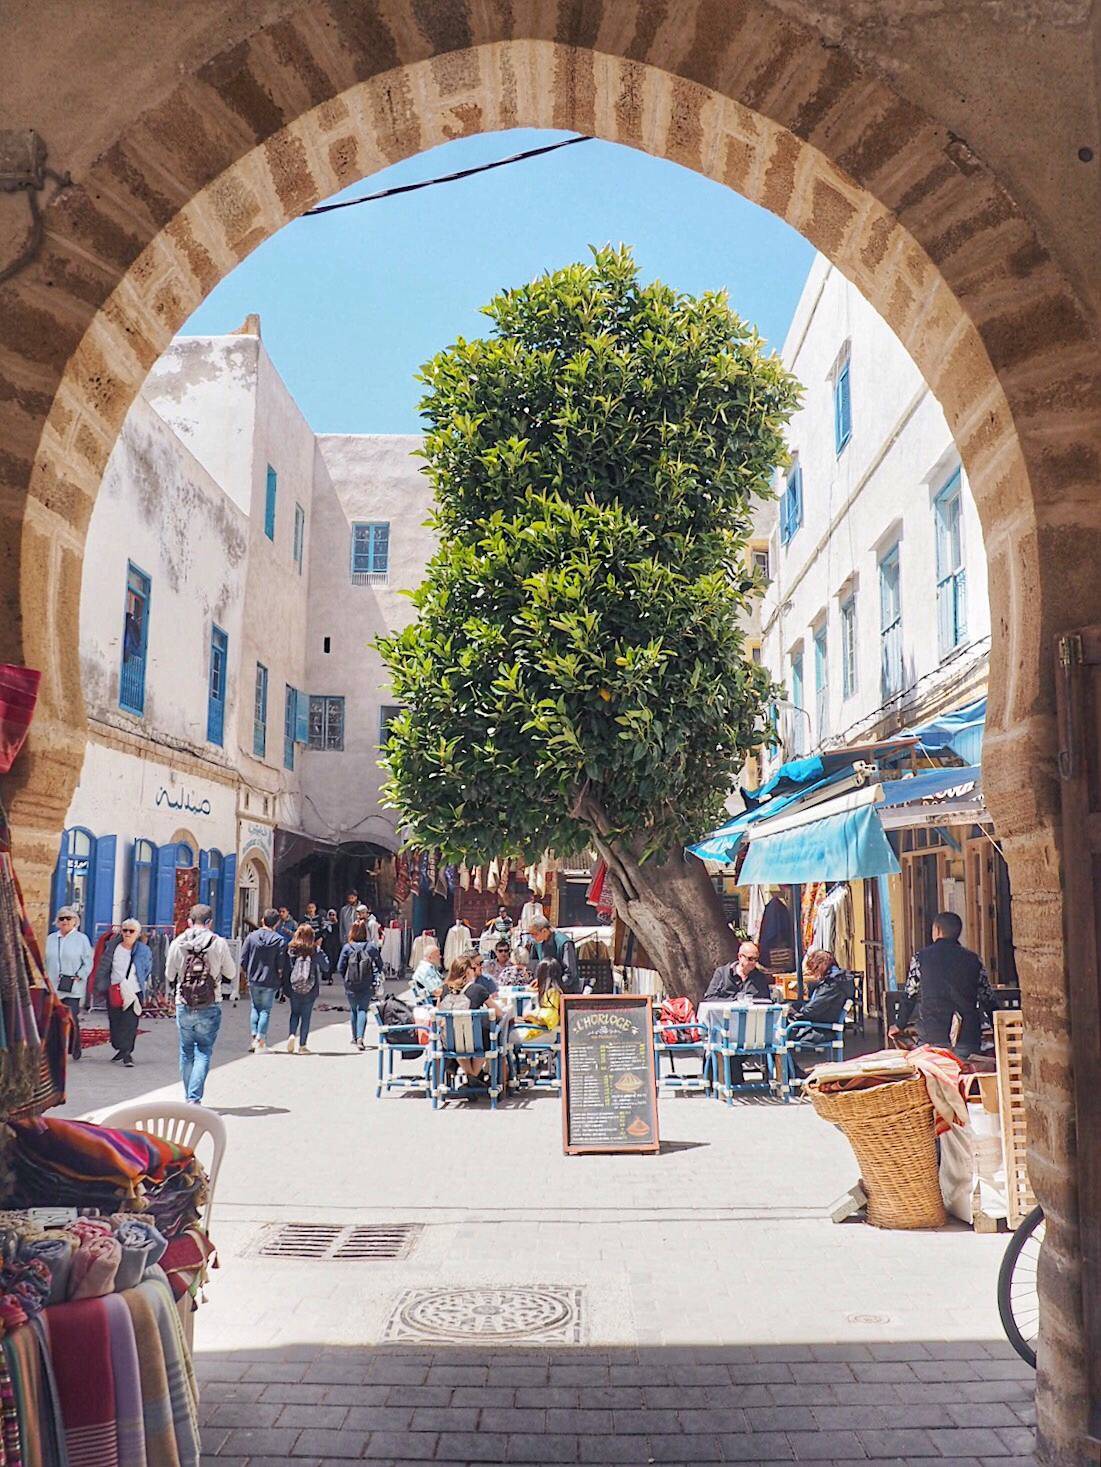 A one day guide to Essaouira, Morocco